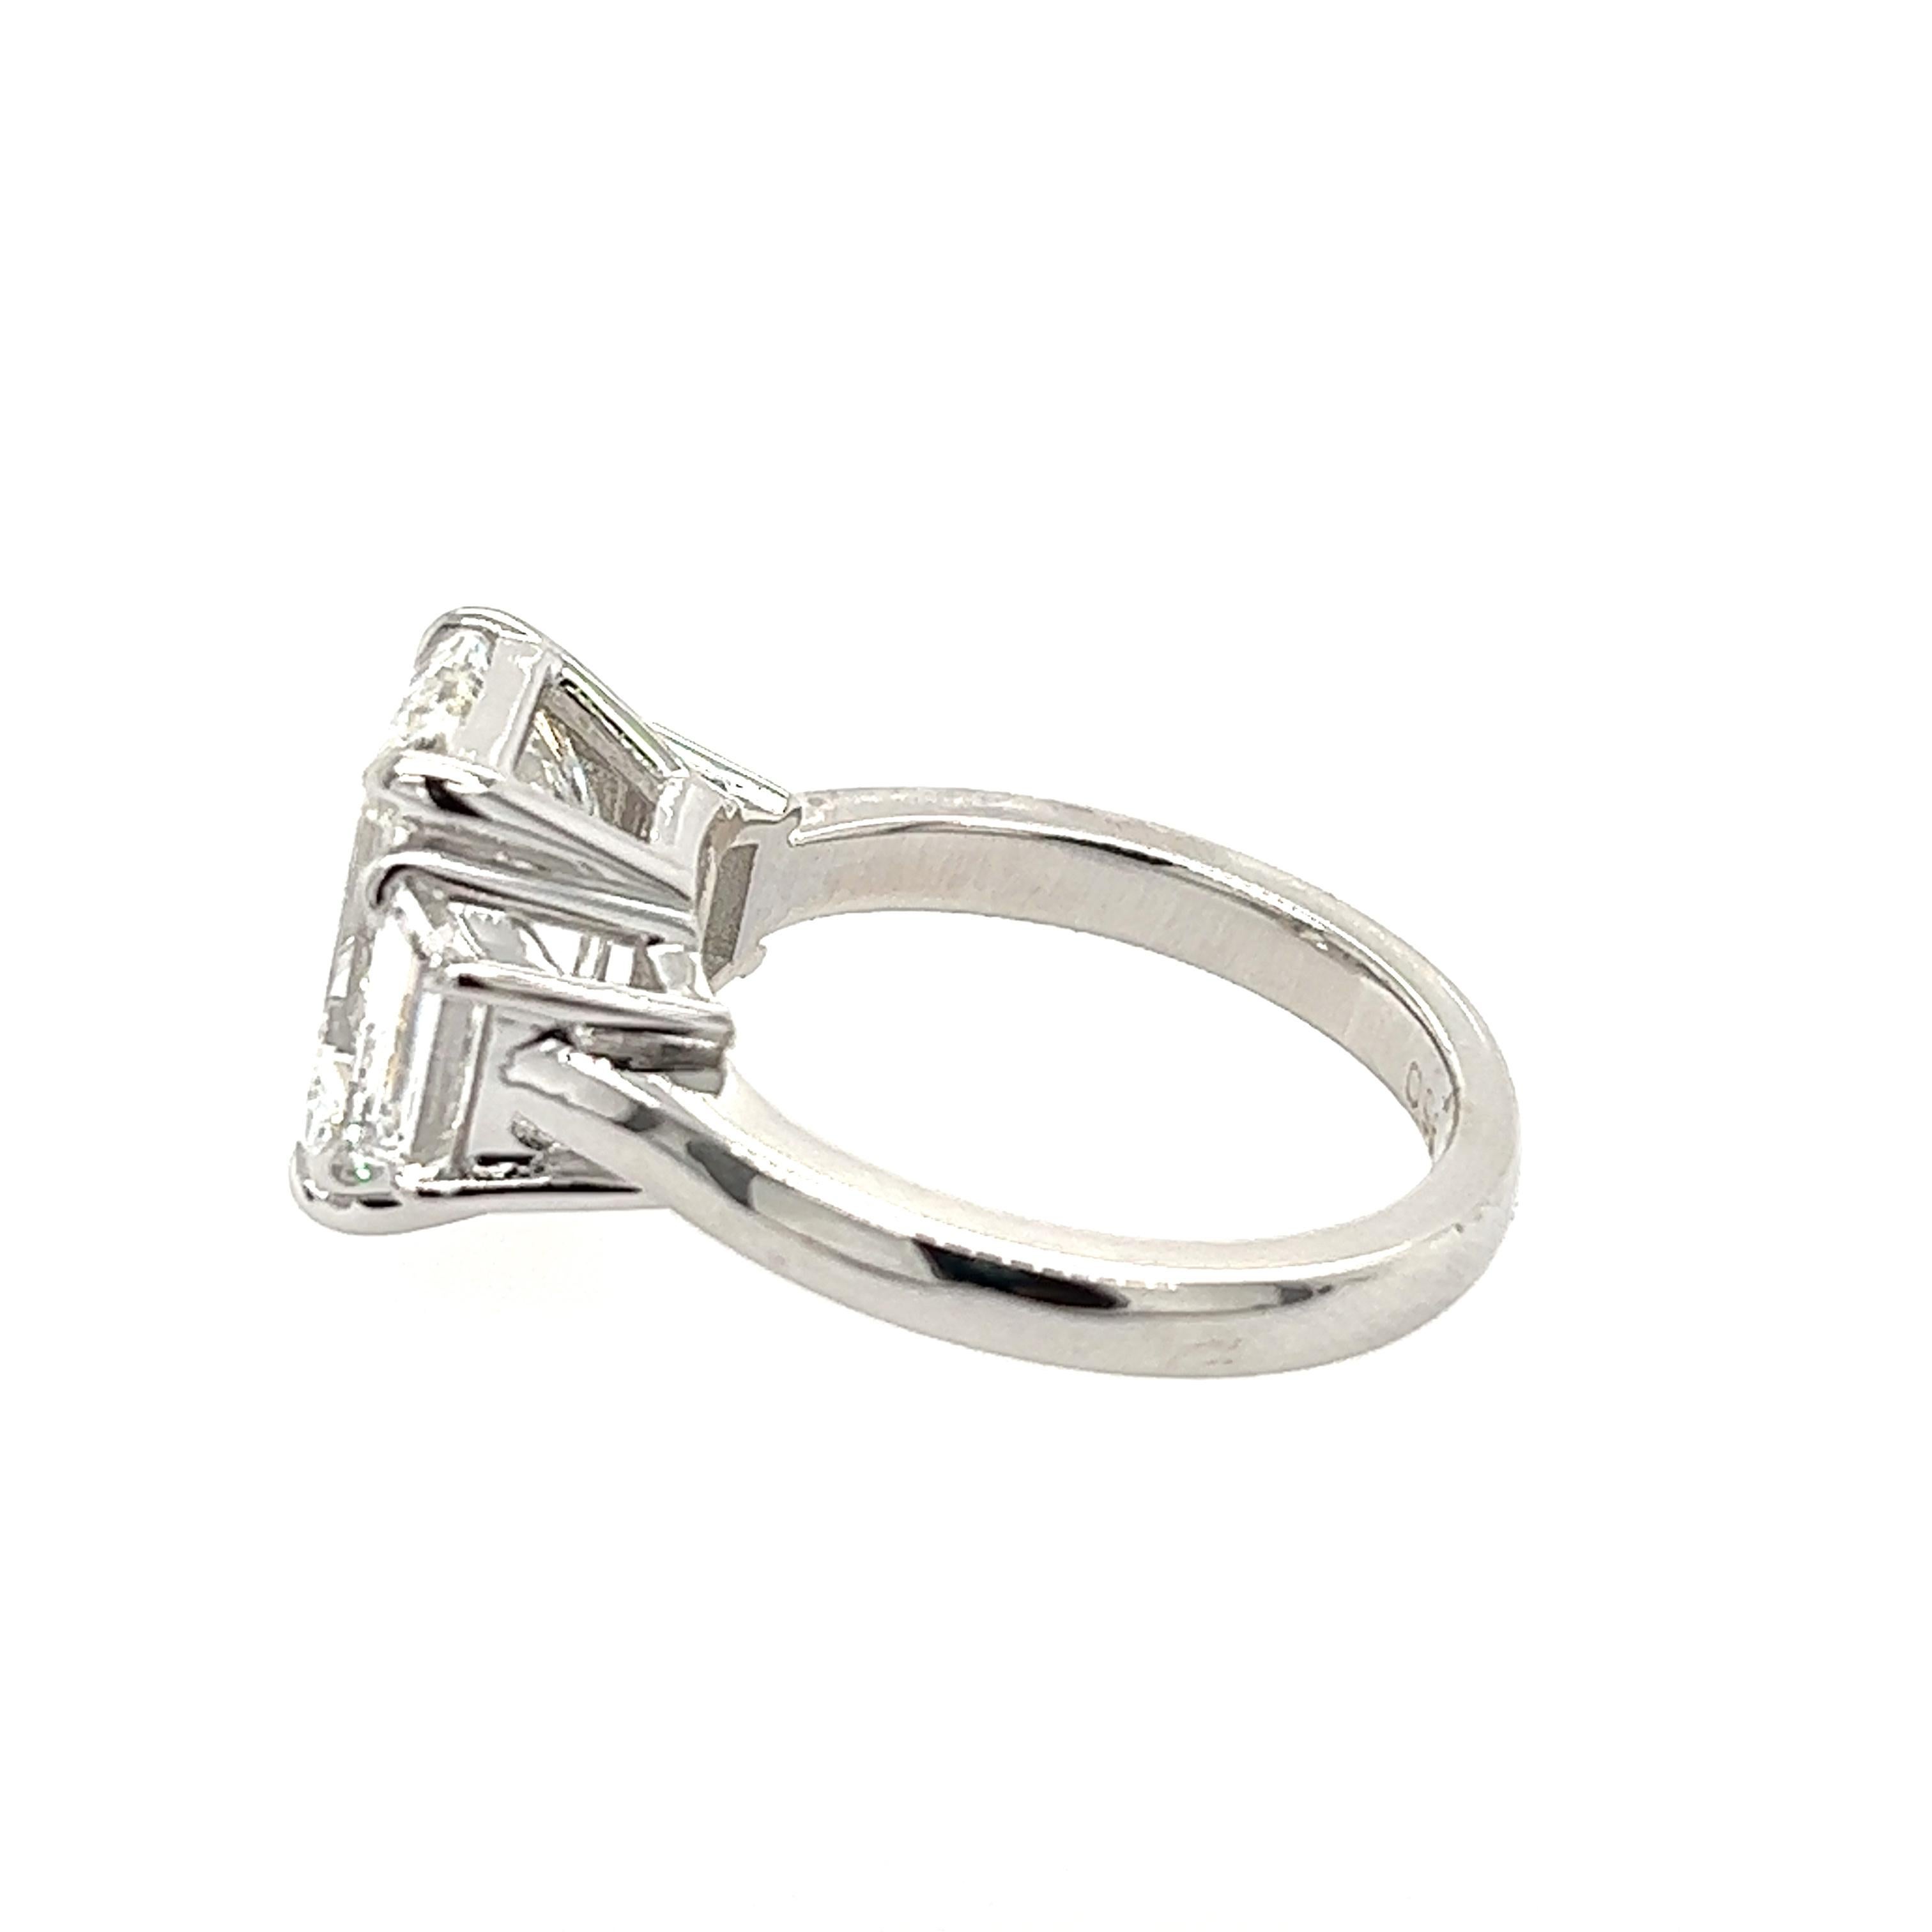 David Rosenberg 5.01 Carat Emerald Cut G VS1 GIA Diamond Engagement Ring For Sale 1